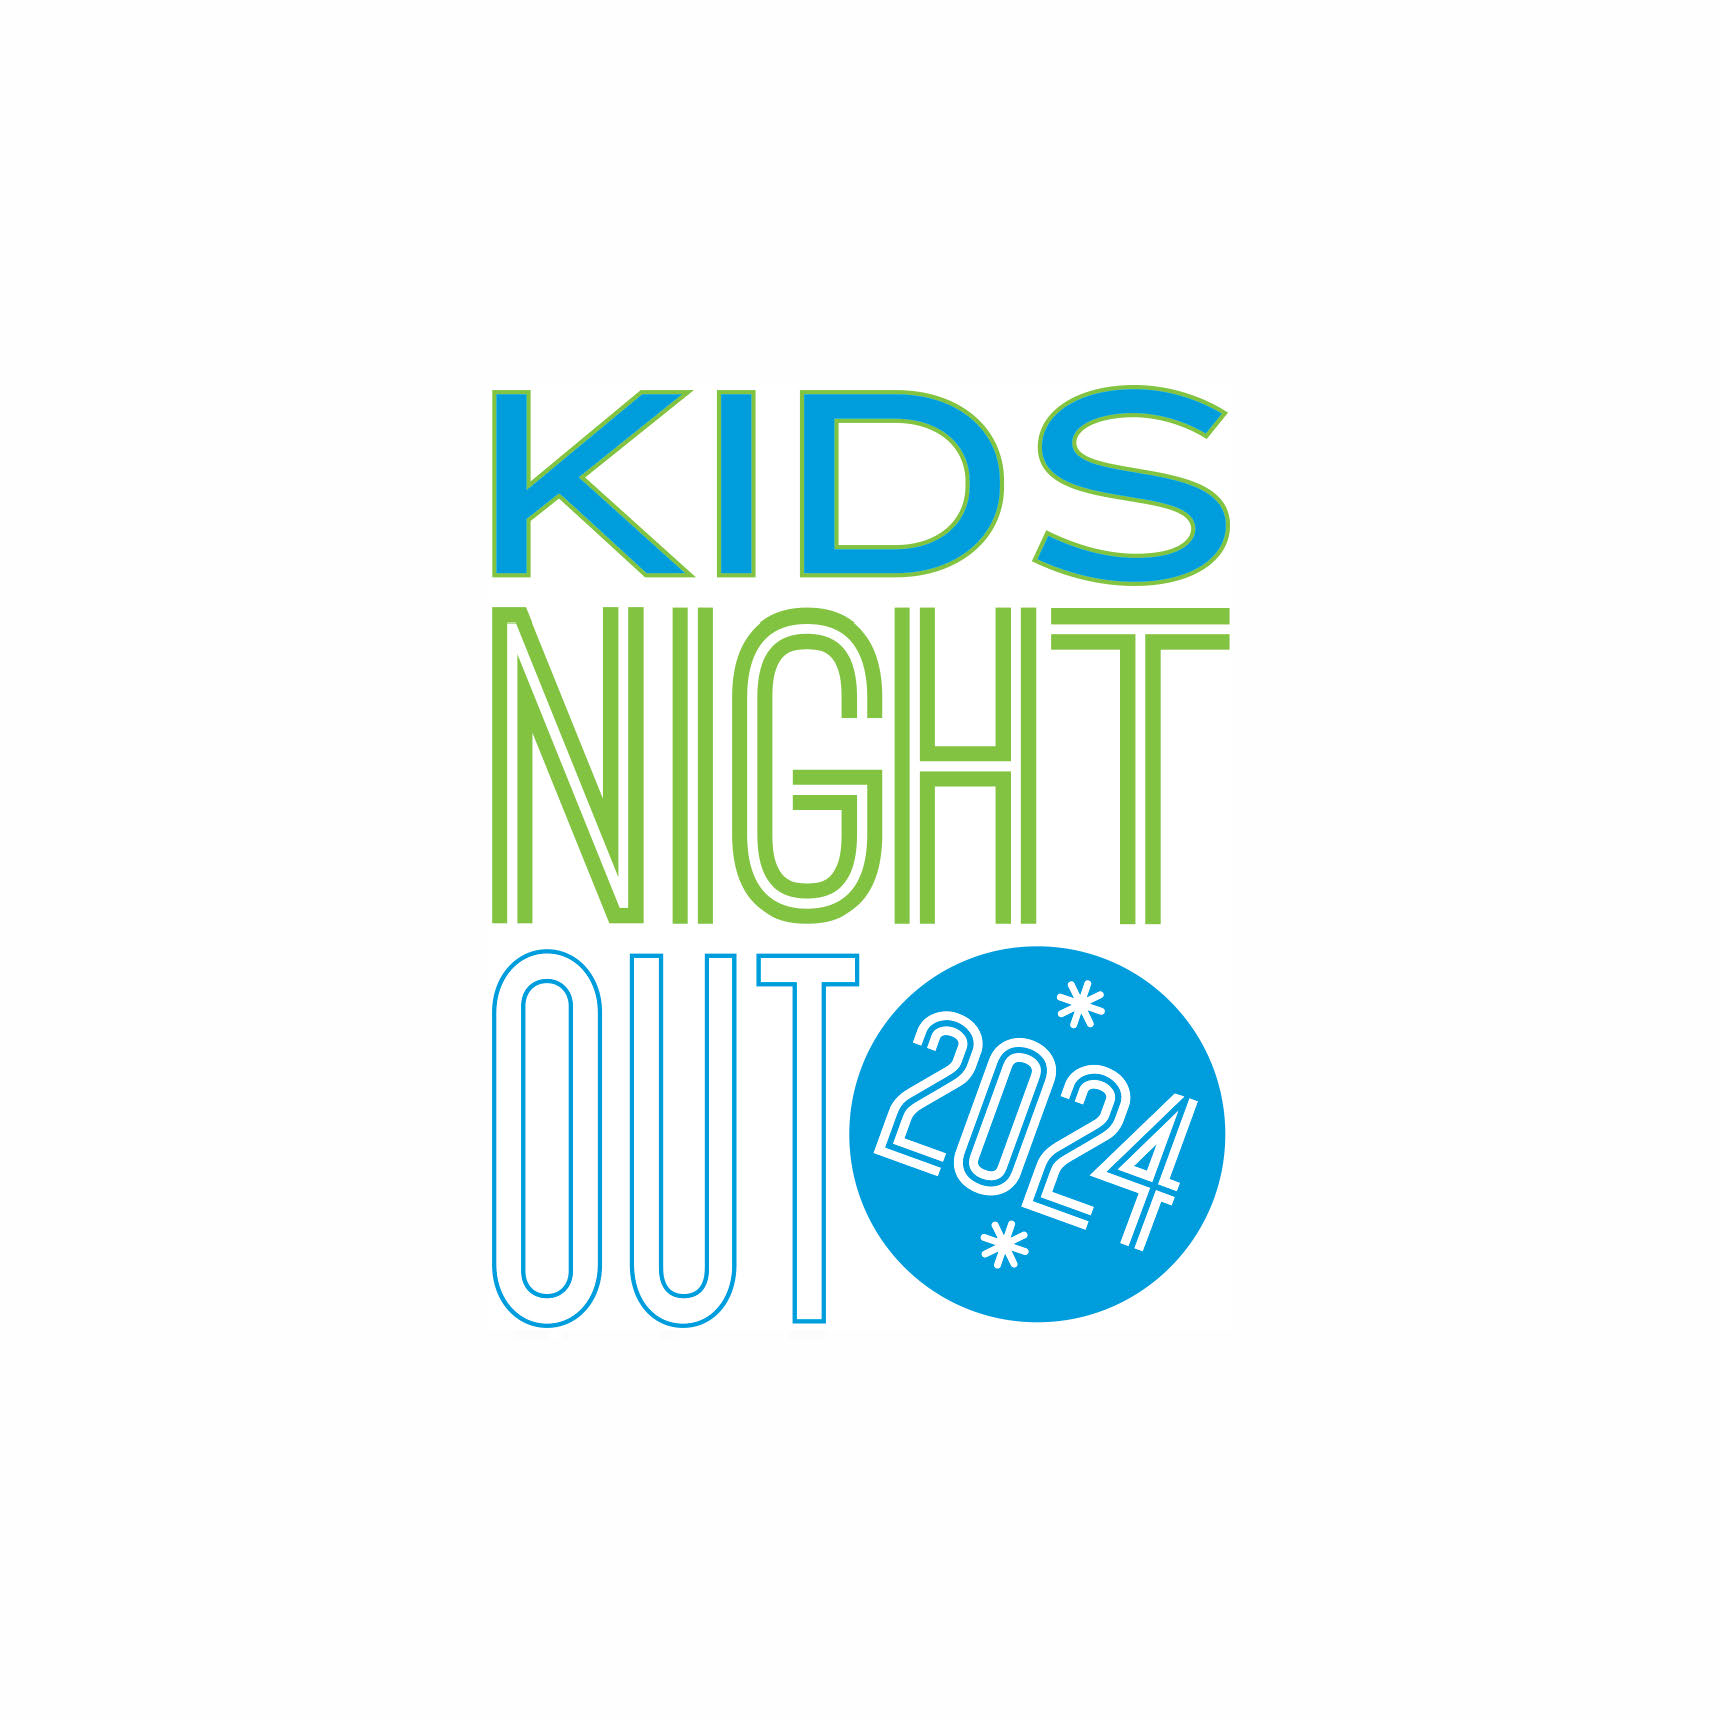 K's Kids Club - Live! Tickets, Multiple Dates